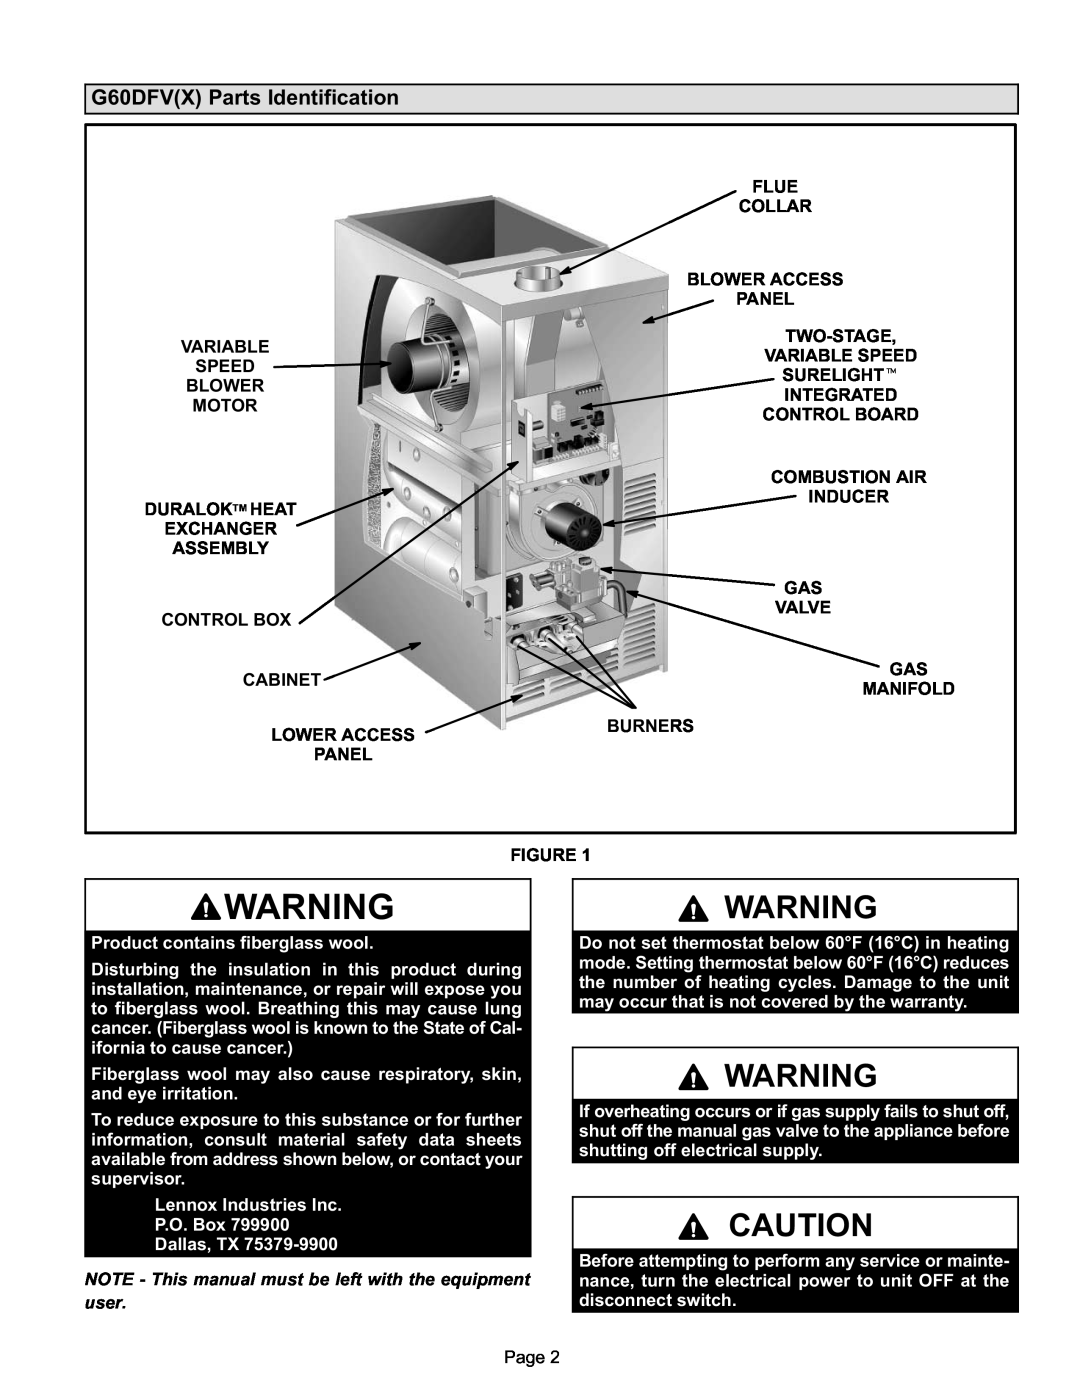 Lenoxx Electronics G60DFV(X) manual G60DFVX Parts Identification 